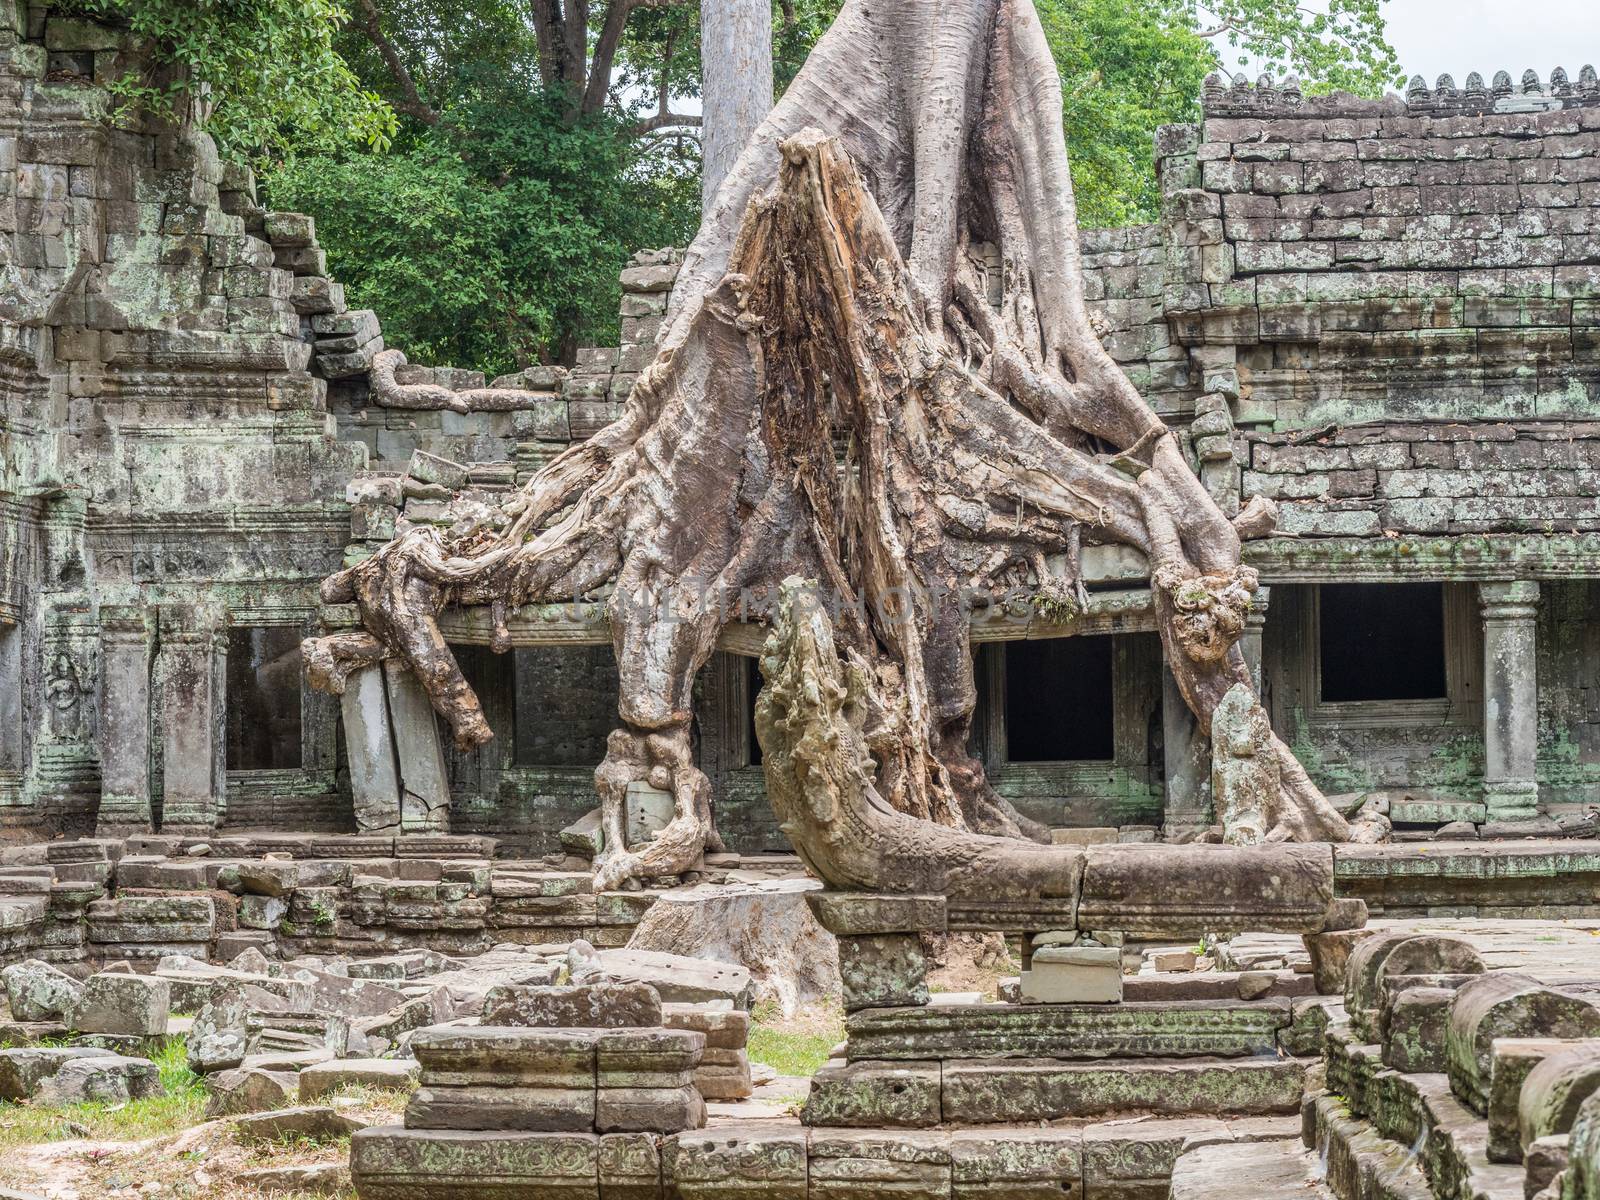 detail of Cambodia's Angkor wat temples